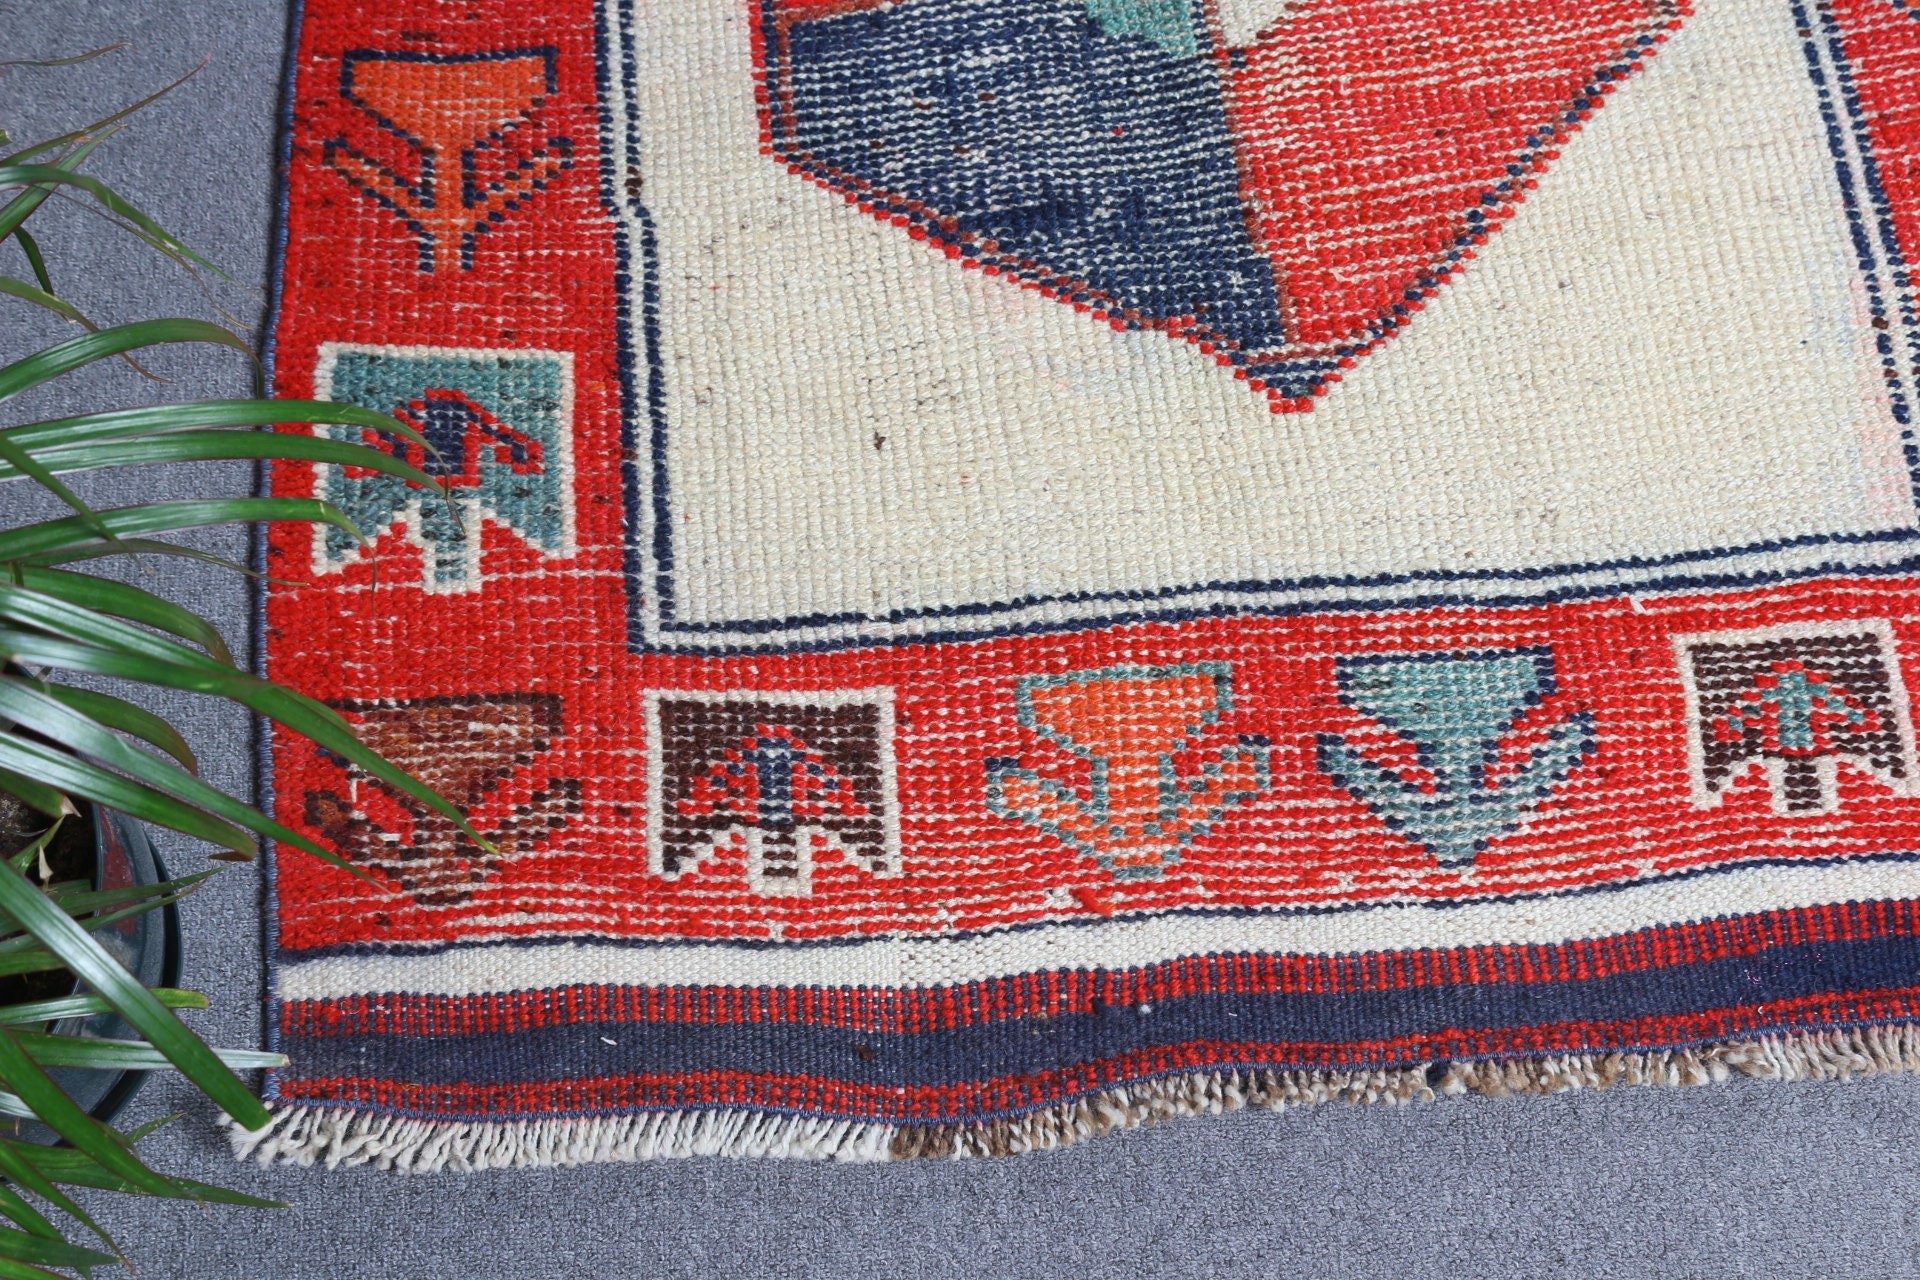 Anatolian Rugs, 3.7x11.5 ft Runner Rugs, Retro Rugs, Kitchen Rug, Turkish Rug, Vintage Rug, Antique Rug, Red Moroccan Rug, Corridor Rugs